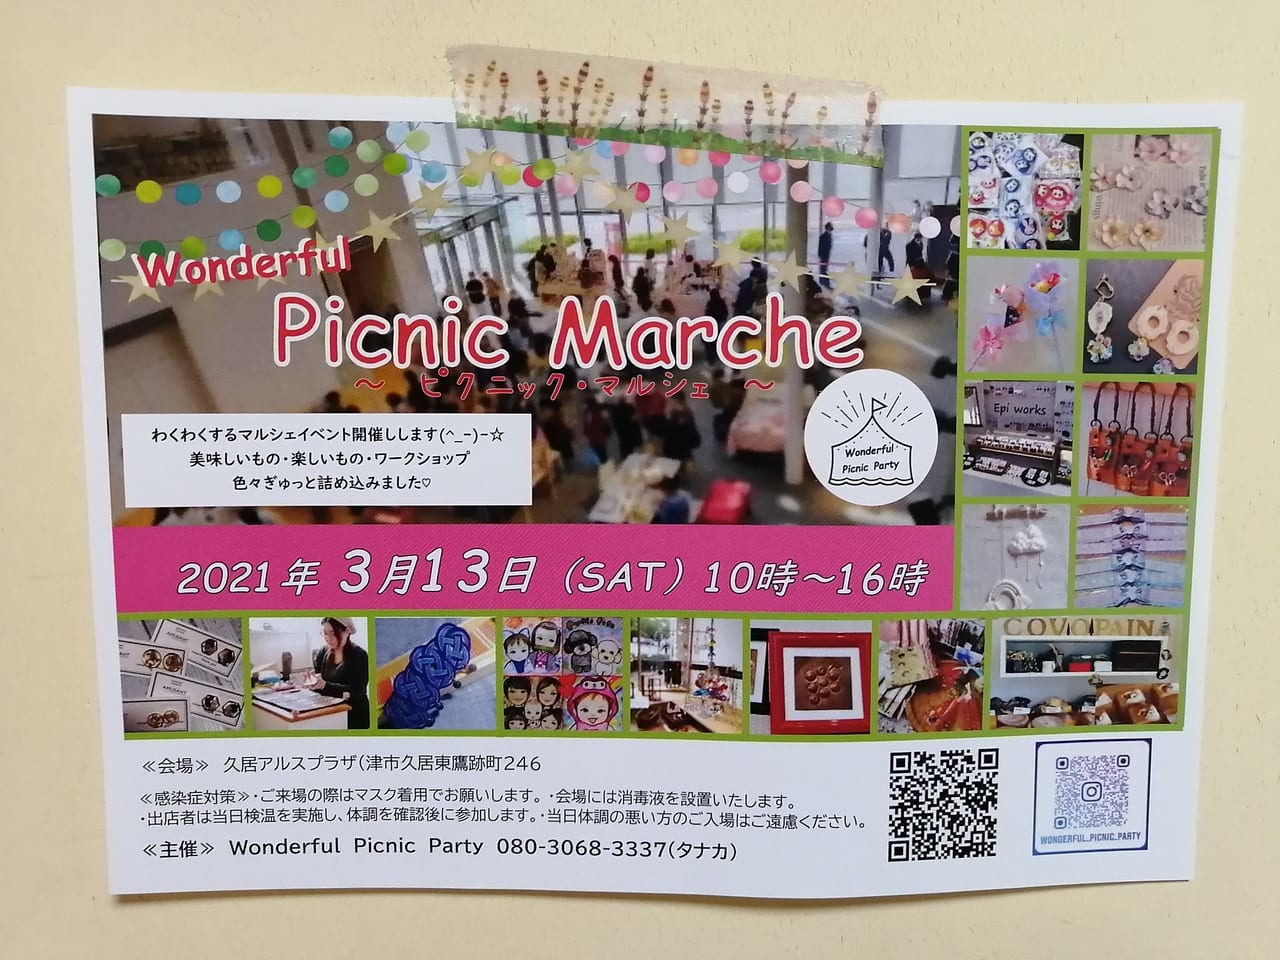 2021年3月13日開催「Wonderful Picnic Marche」